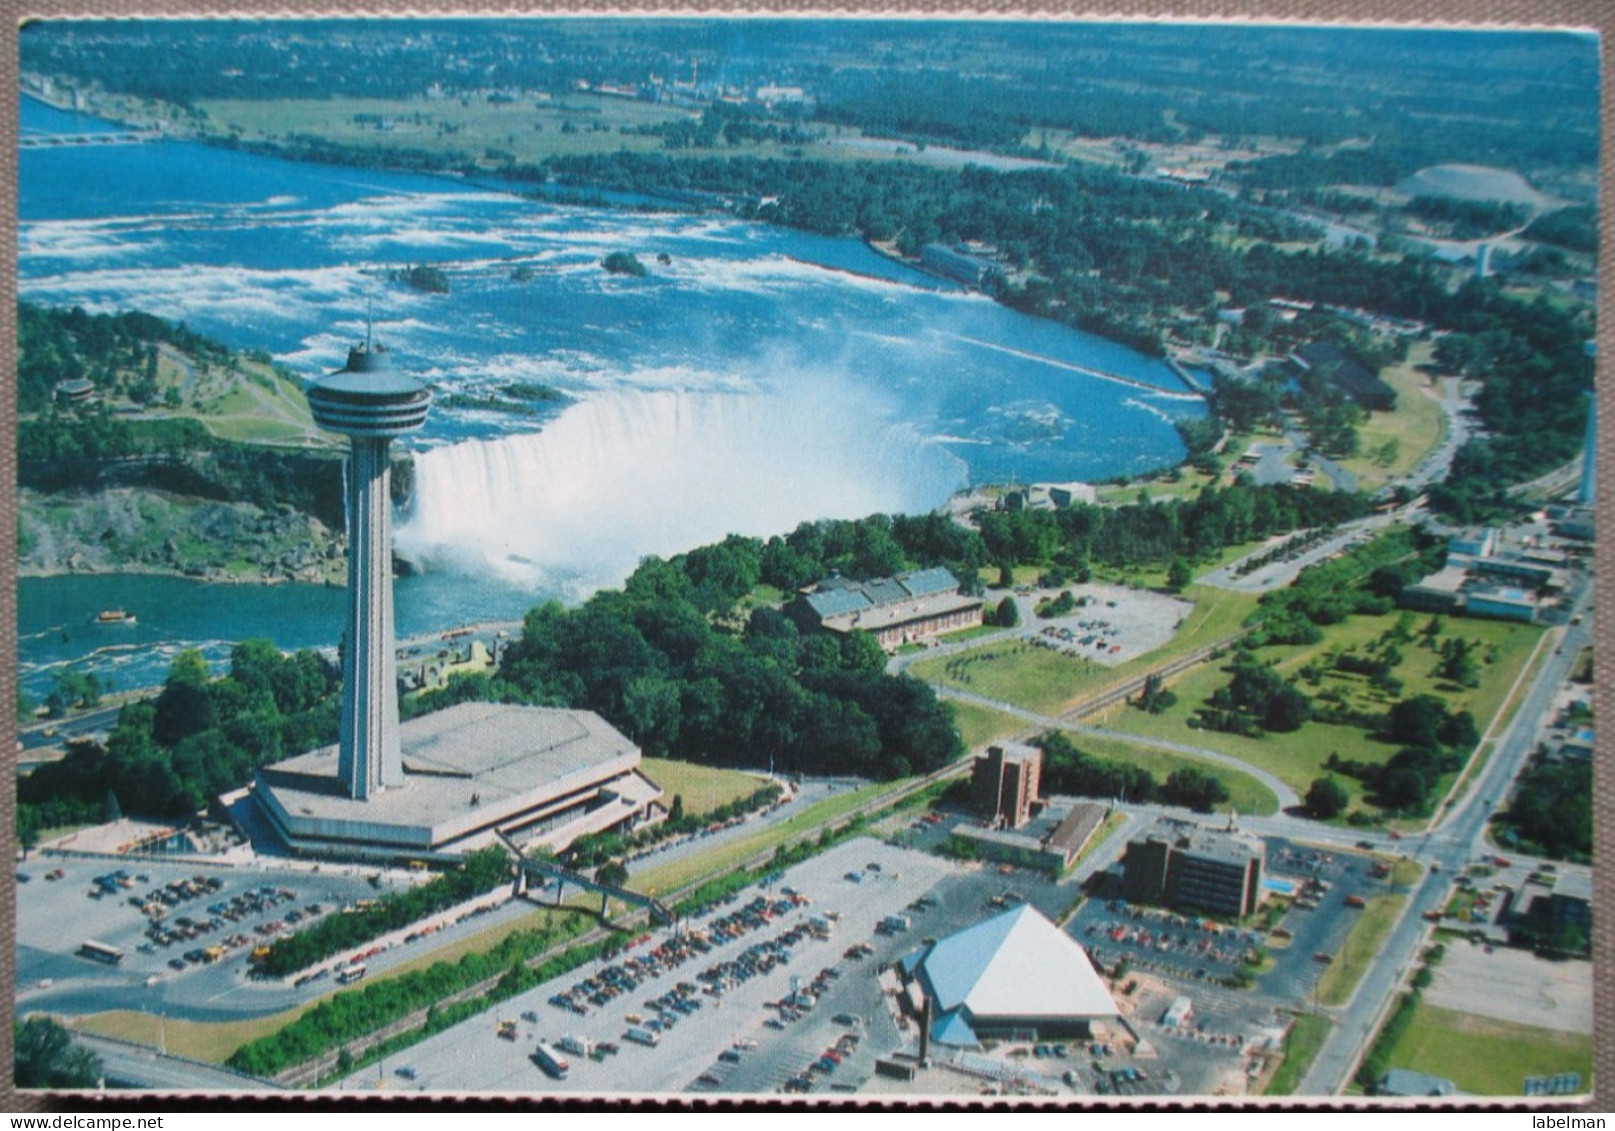 CANADA ONTARIO NIAGARA FALLS PYRAMID PLACE KARTE CARD POSTKARTE ANSICHTSKARTE CARTOLINA POSTCARD CARTE POSTALE - Huntsville